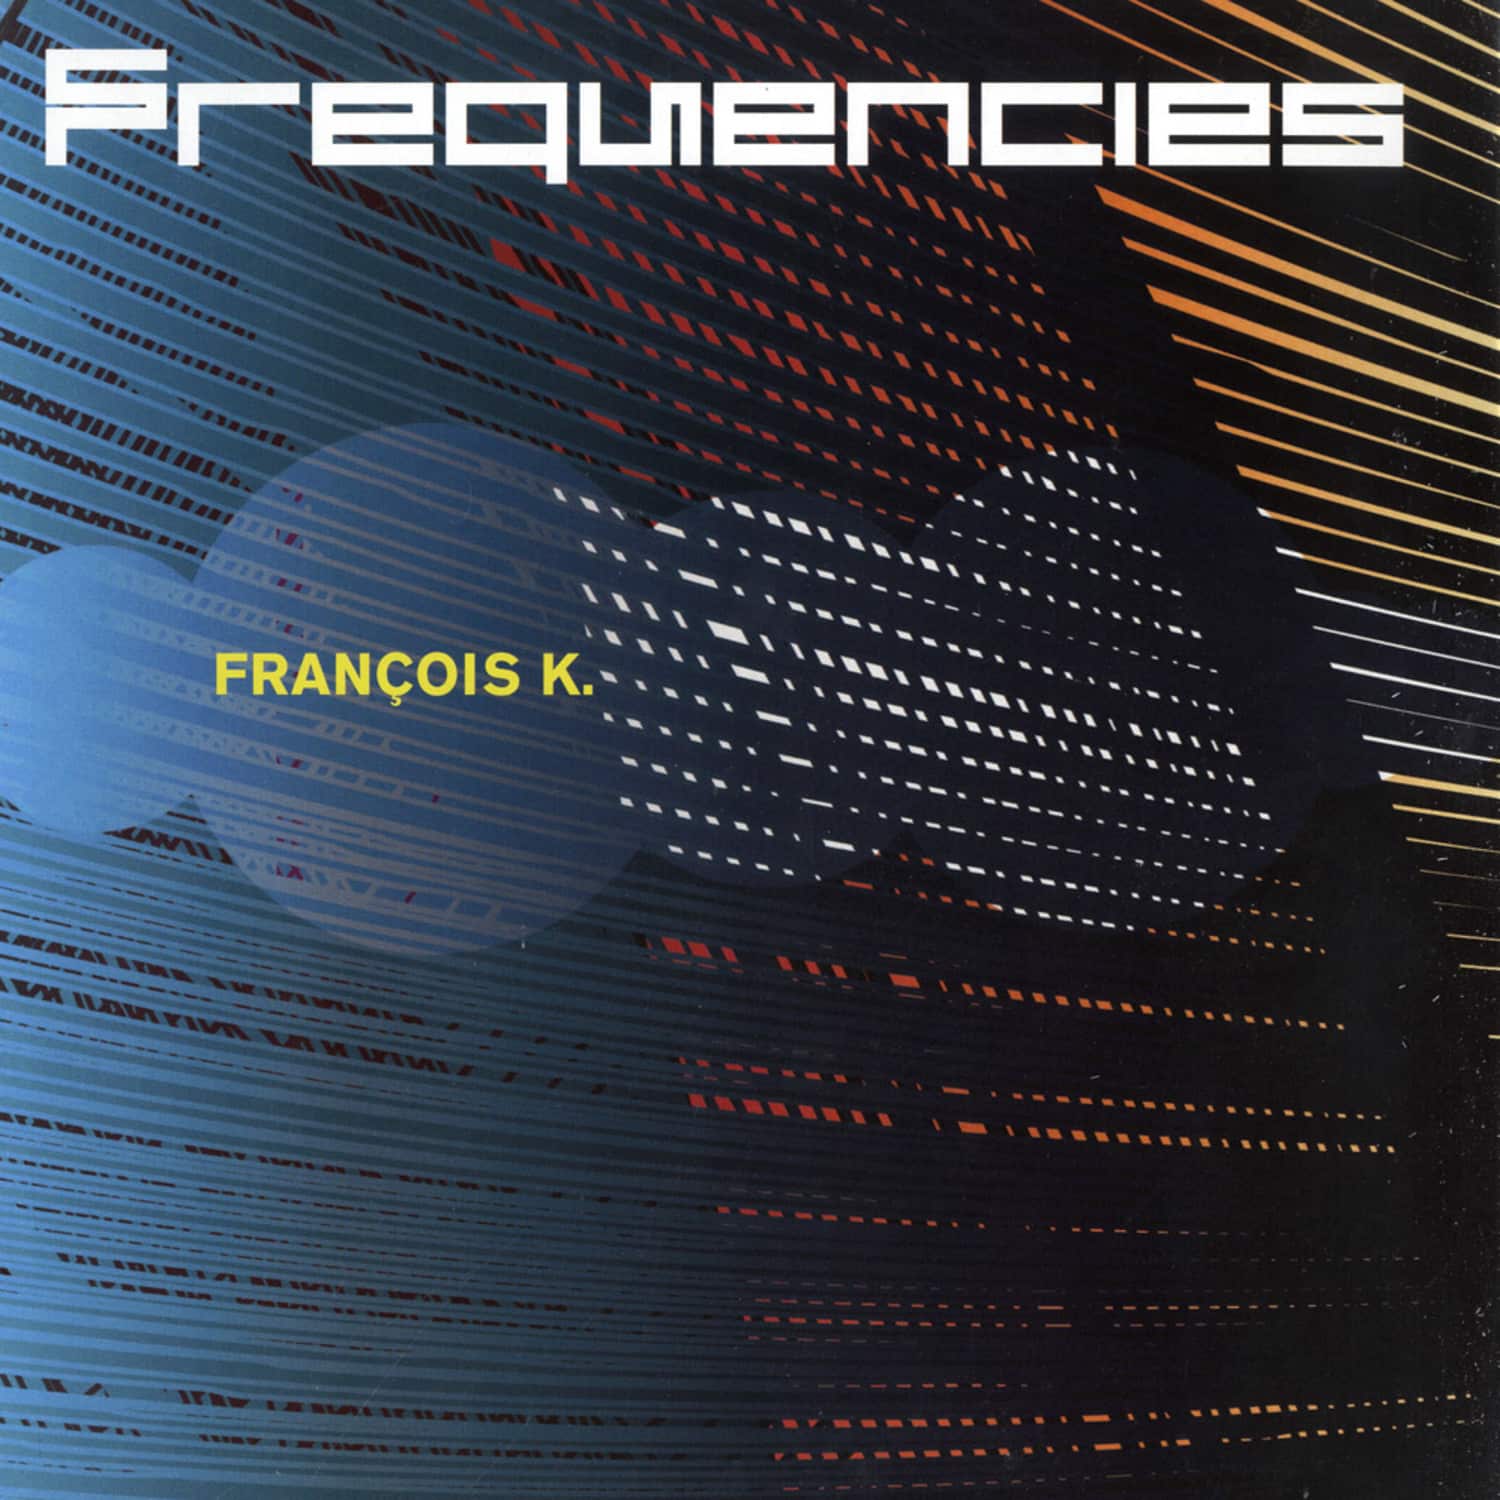 Francois K - FREQUENCIES 